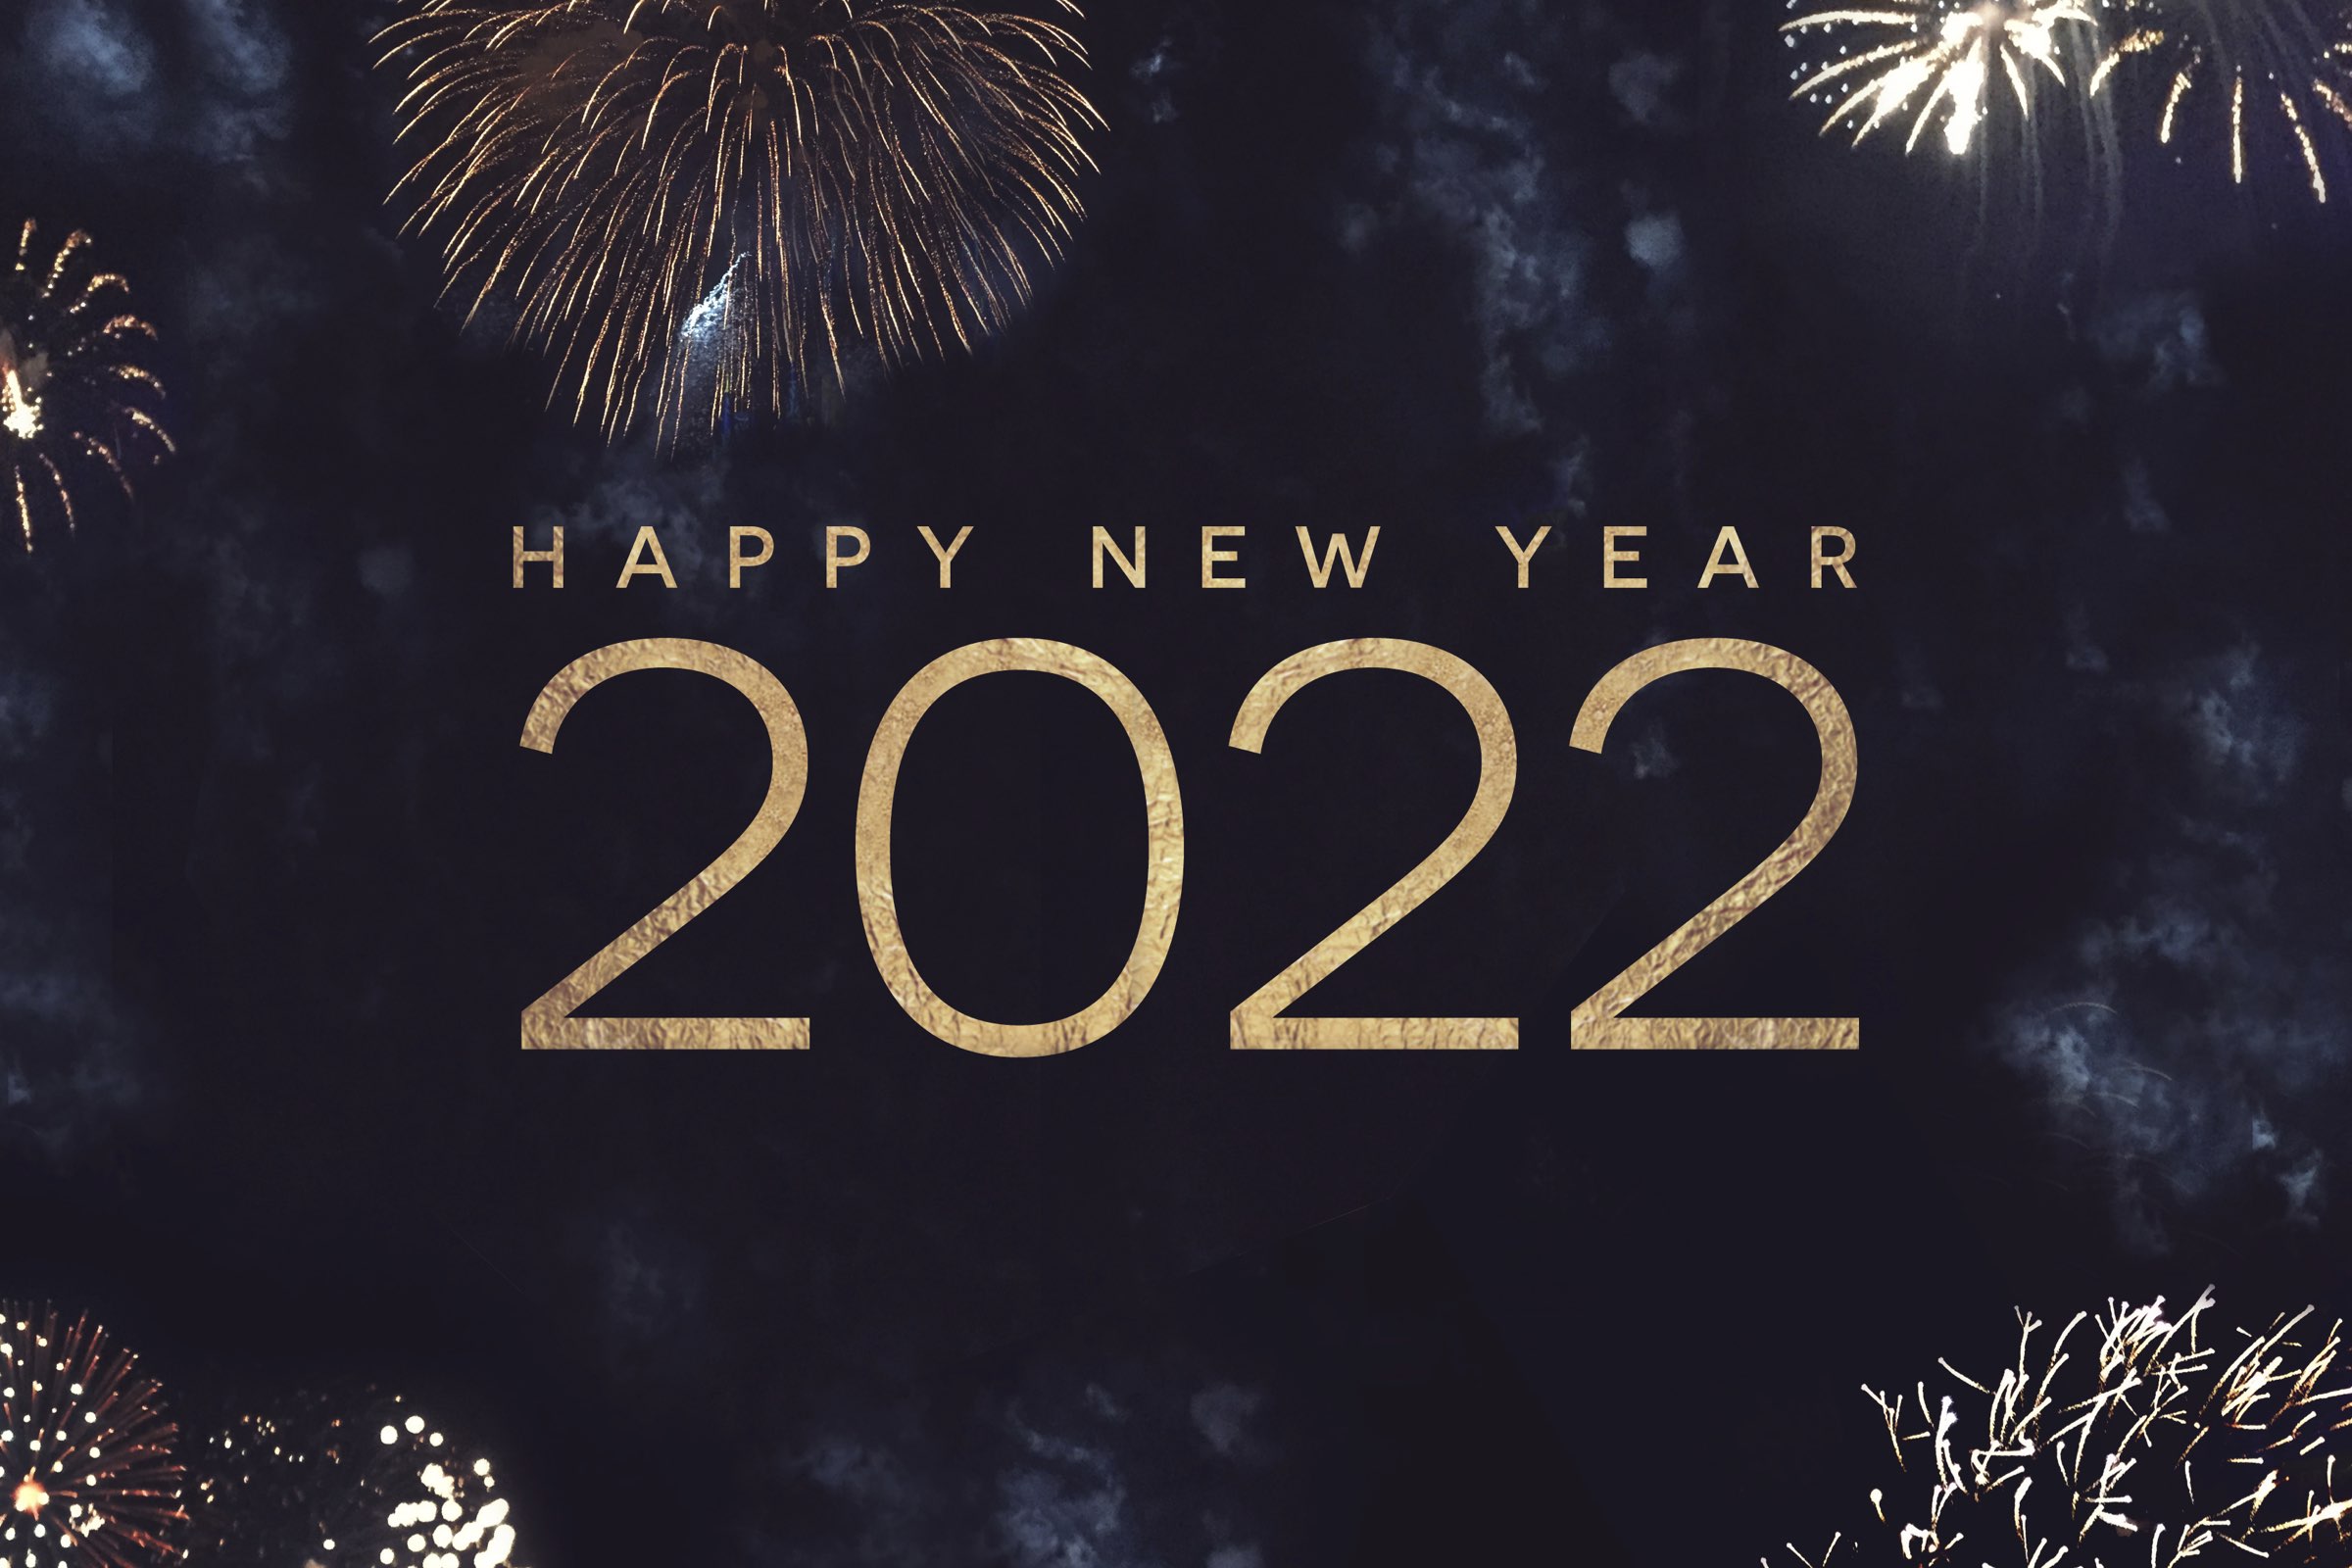 New Year Downsizing Resolution 2022